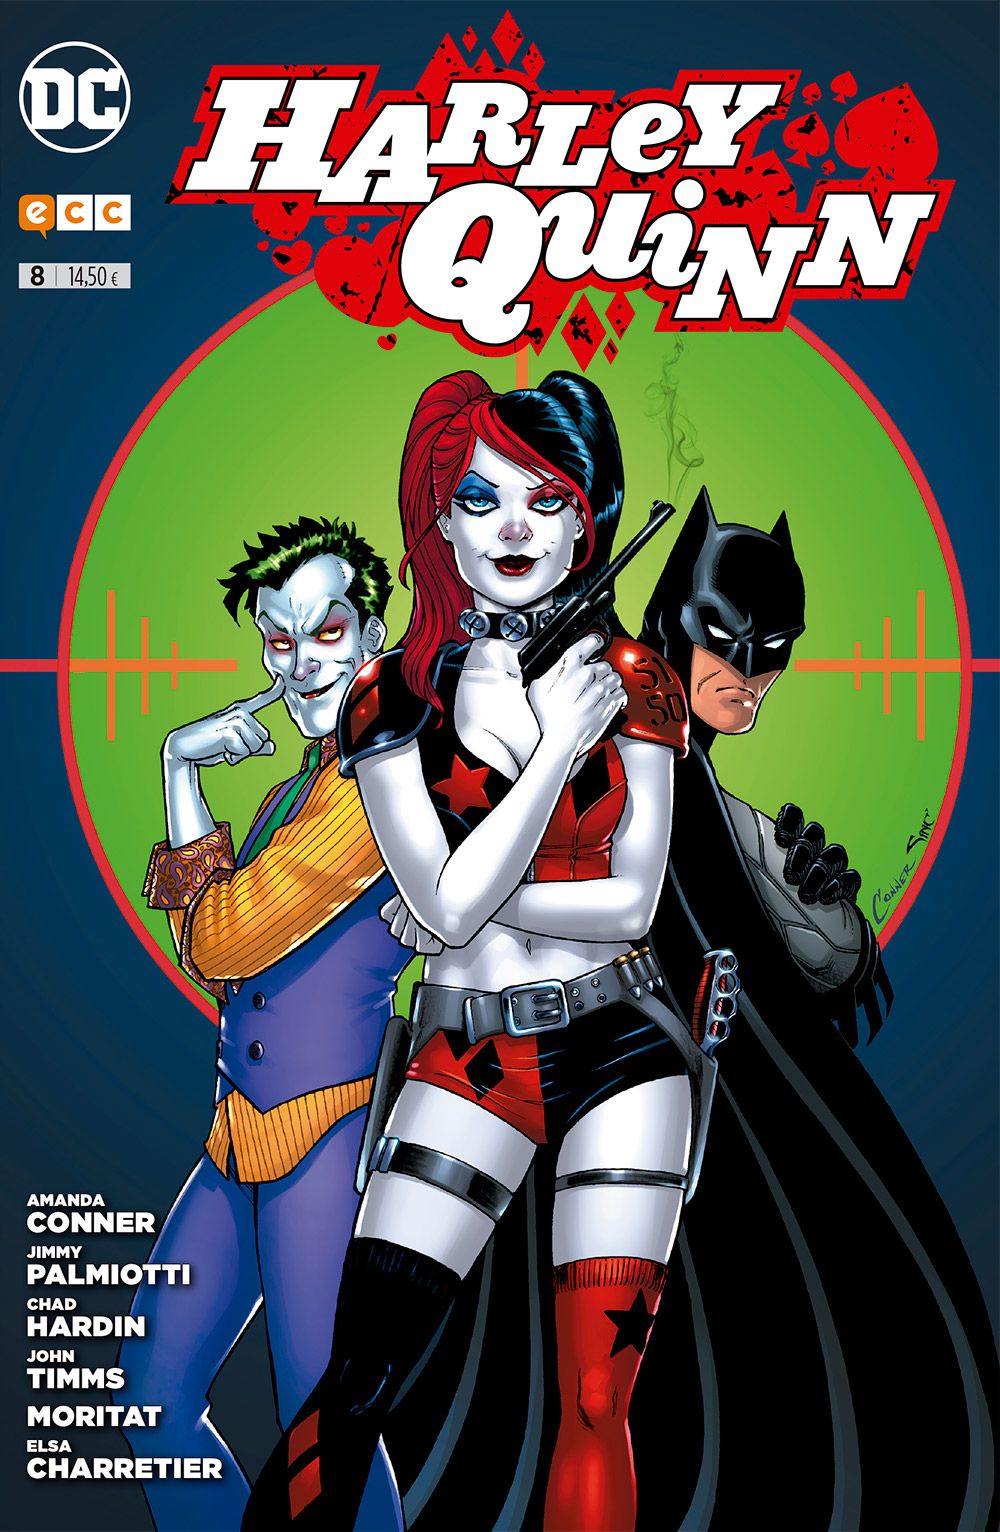 “Harley Quinn #8” (Jimmy Palmiotti, Amanda Conner y Chad Hardin, ECC Ediciones)